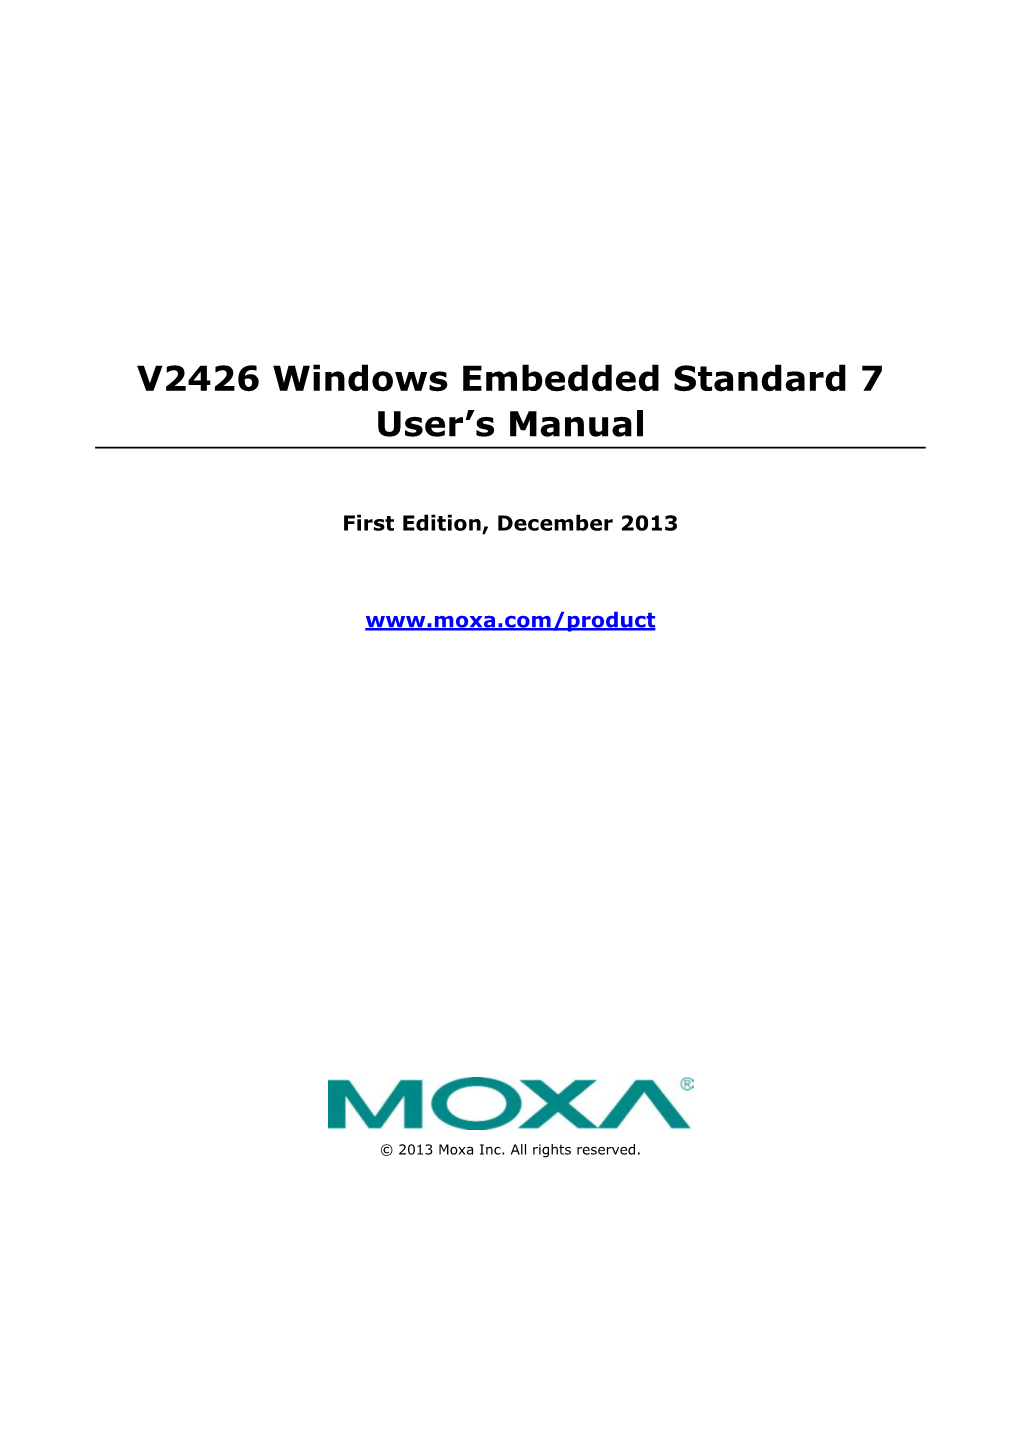 V2426 Windows Embedded Standard 7 User's Manual